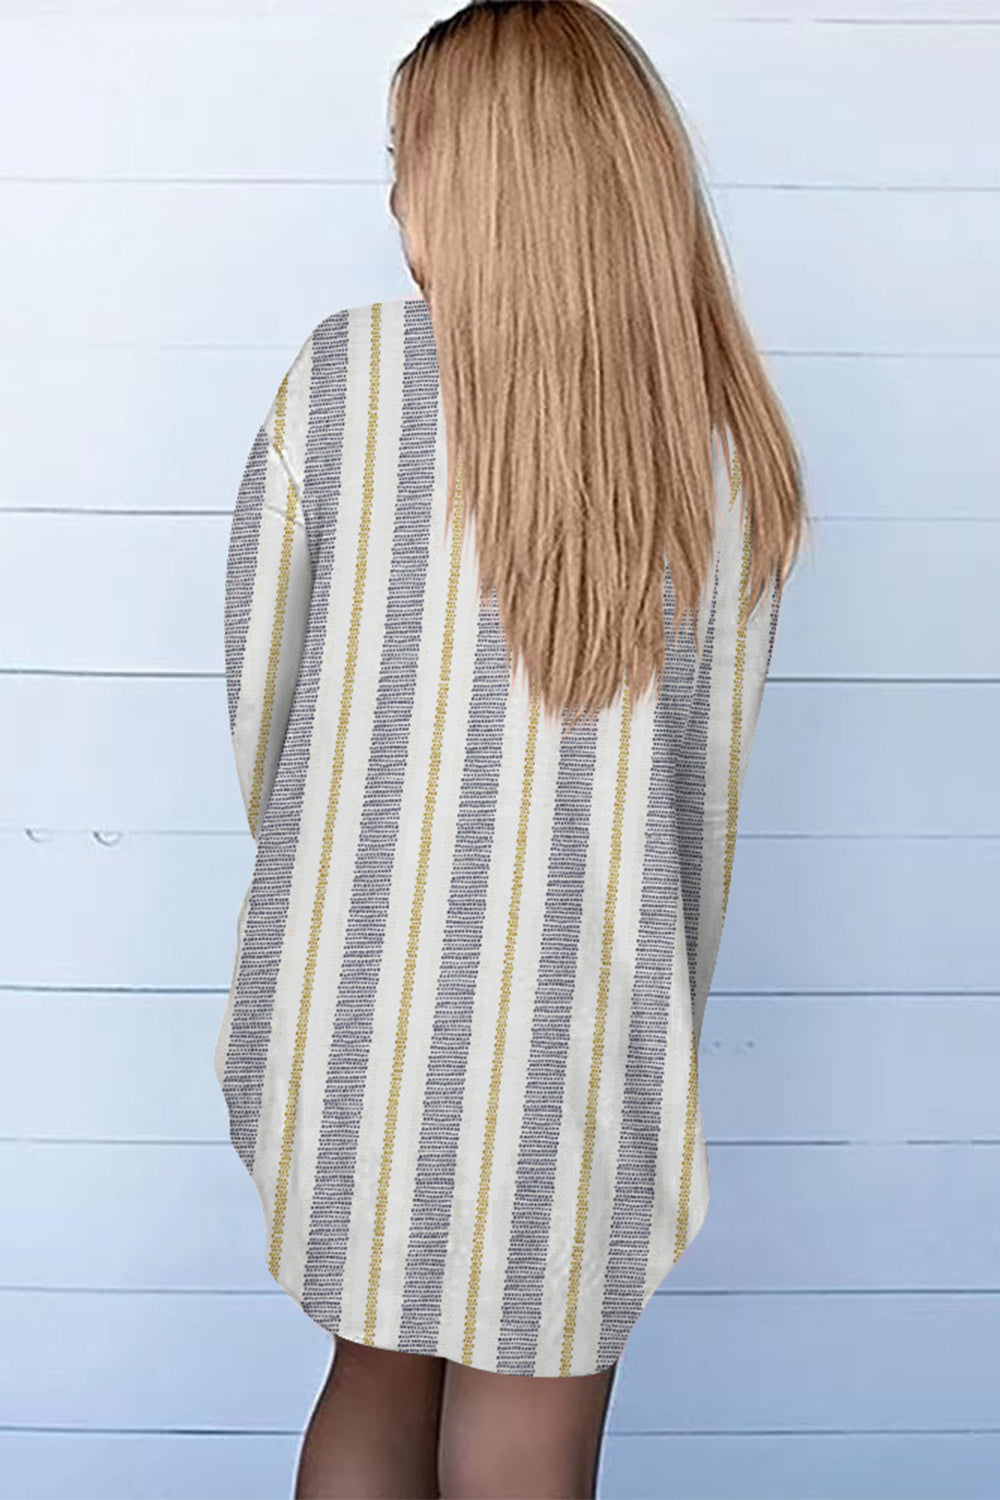 Back View, Long Sleeve Cardigan In Stripe